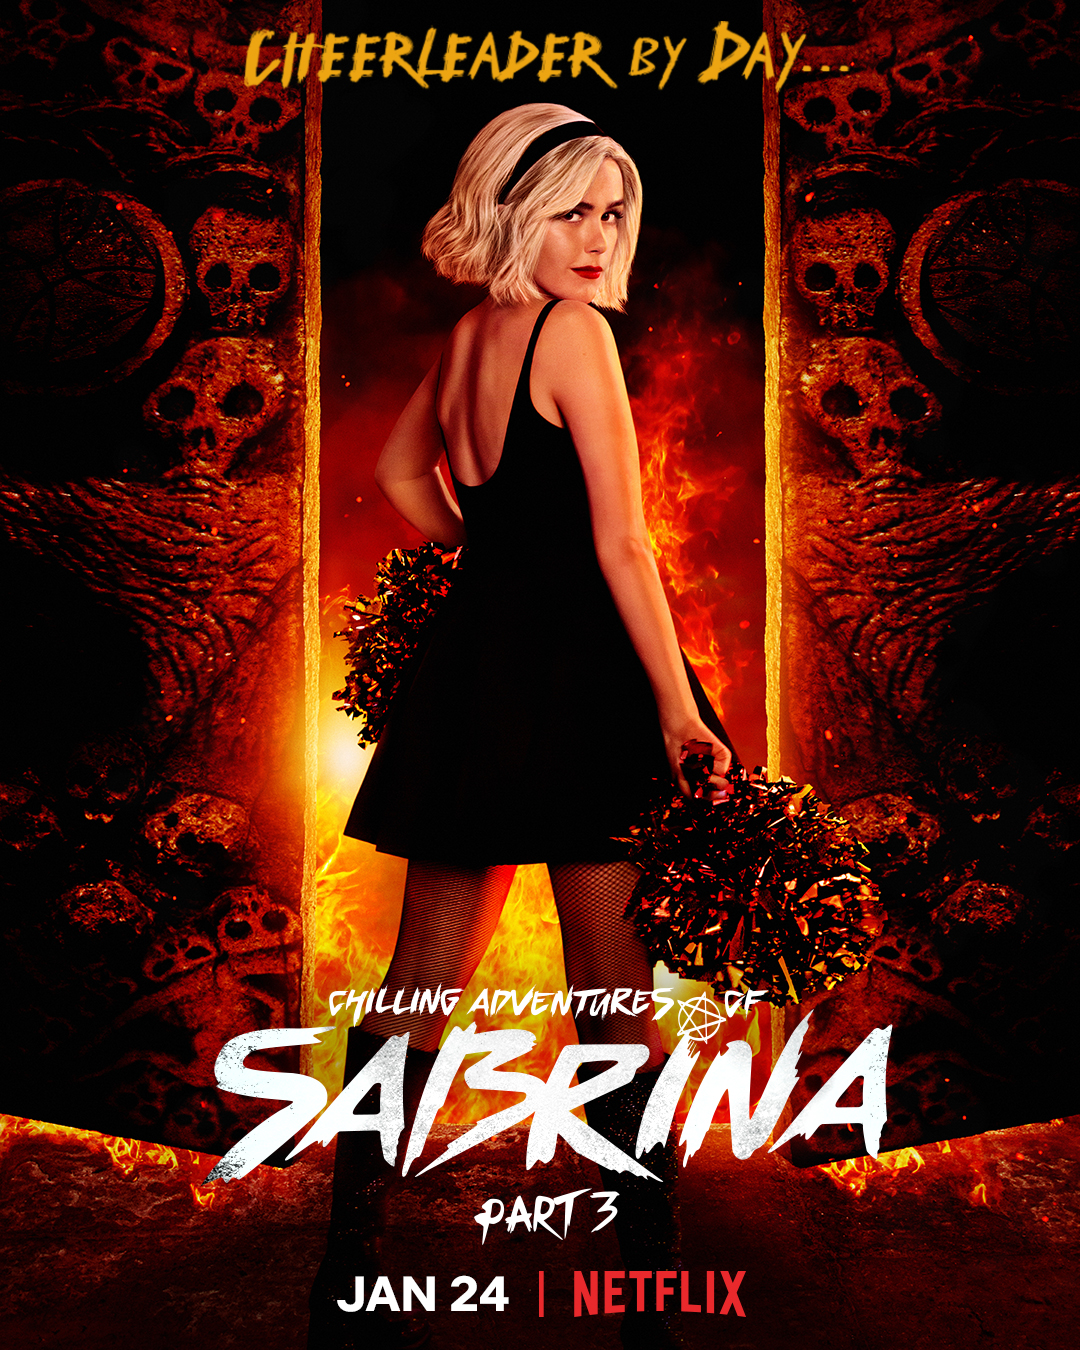 Jedidiah Goodacre, Chilling Adventures of Sabrina Wiki